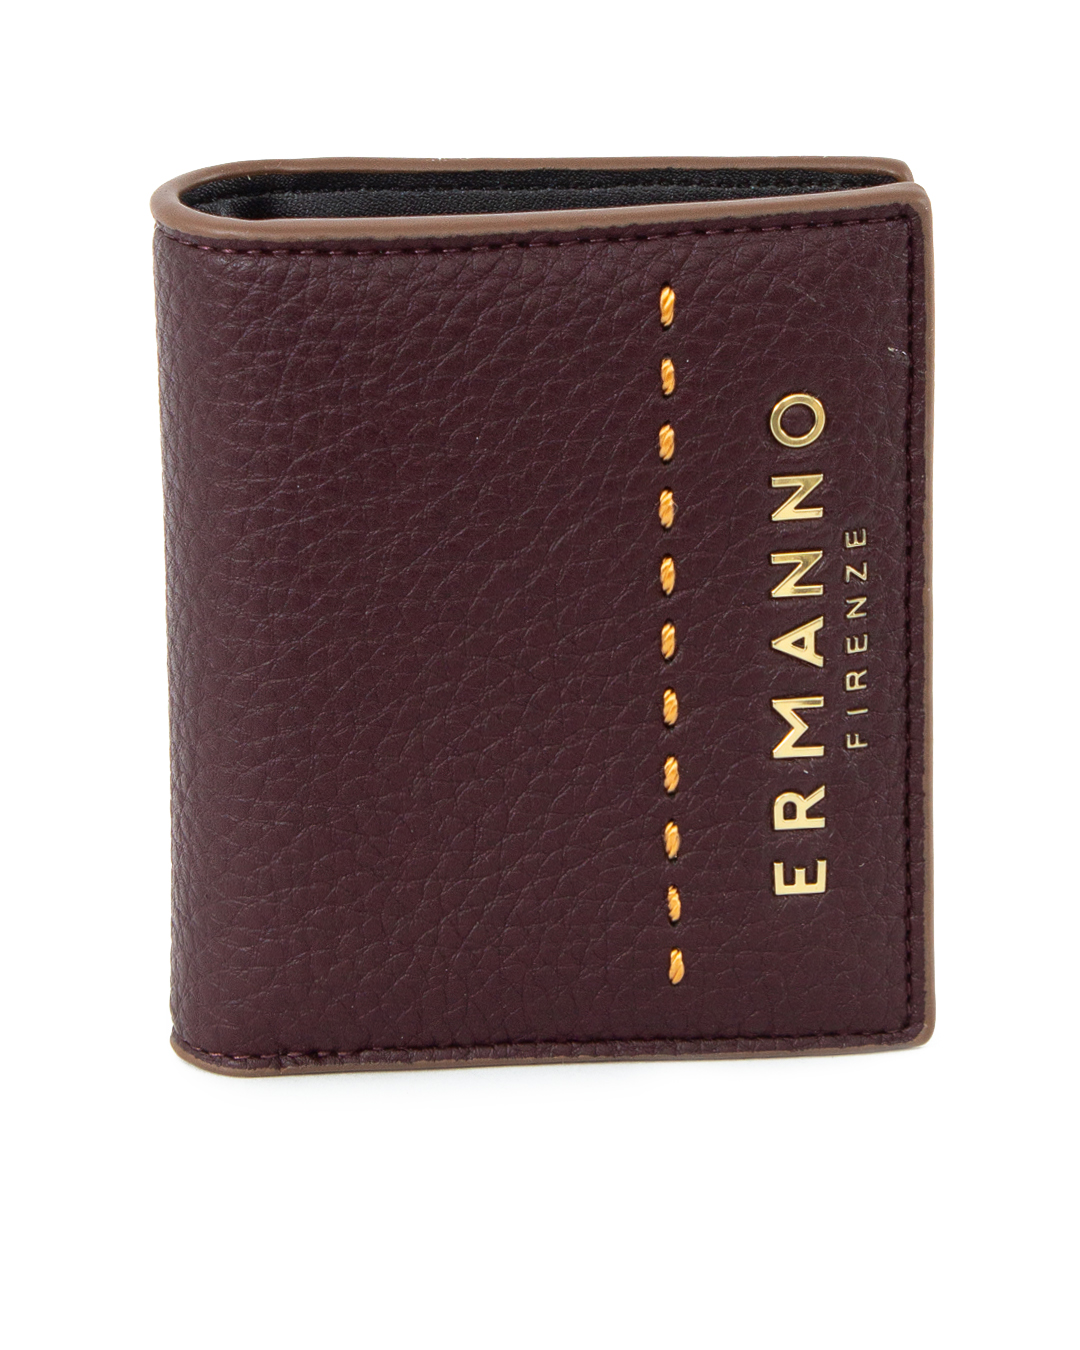 Ermanno Ermanno Scervino с логотипом бренда  артикул 12600336 марки Ermanno Ermanno Scervino купить за 10000 руб.